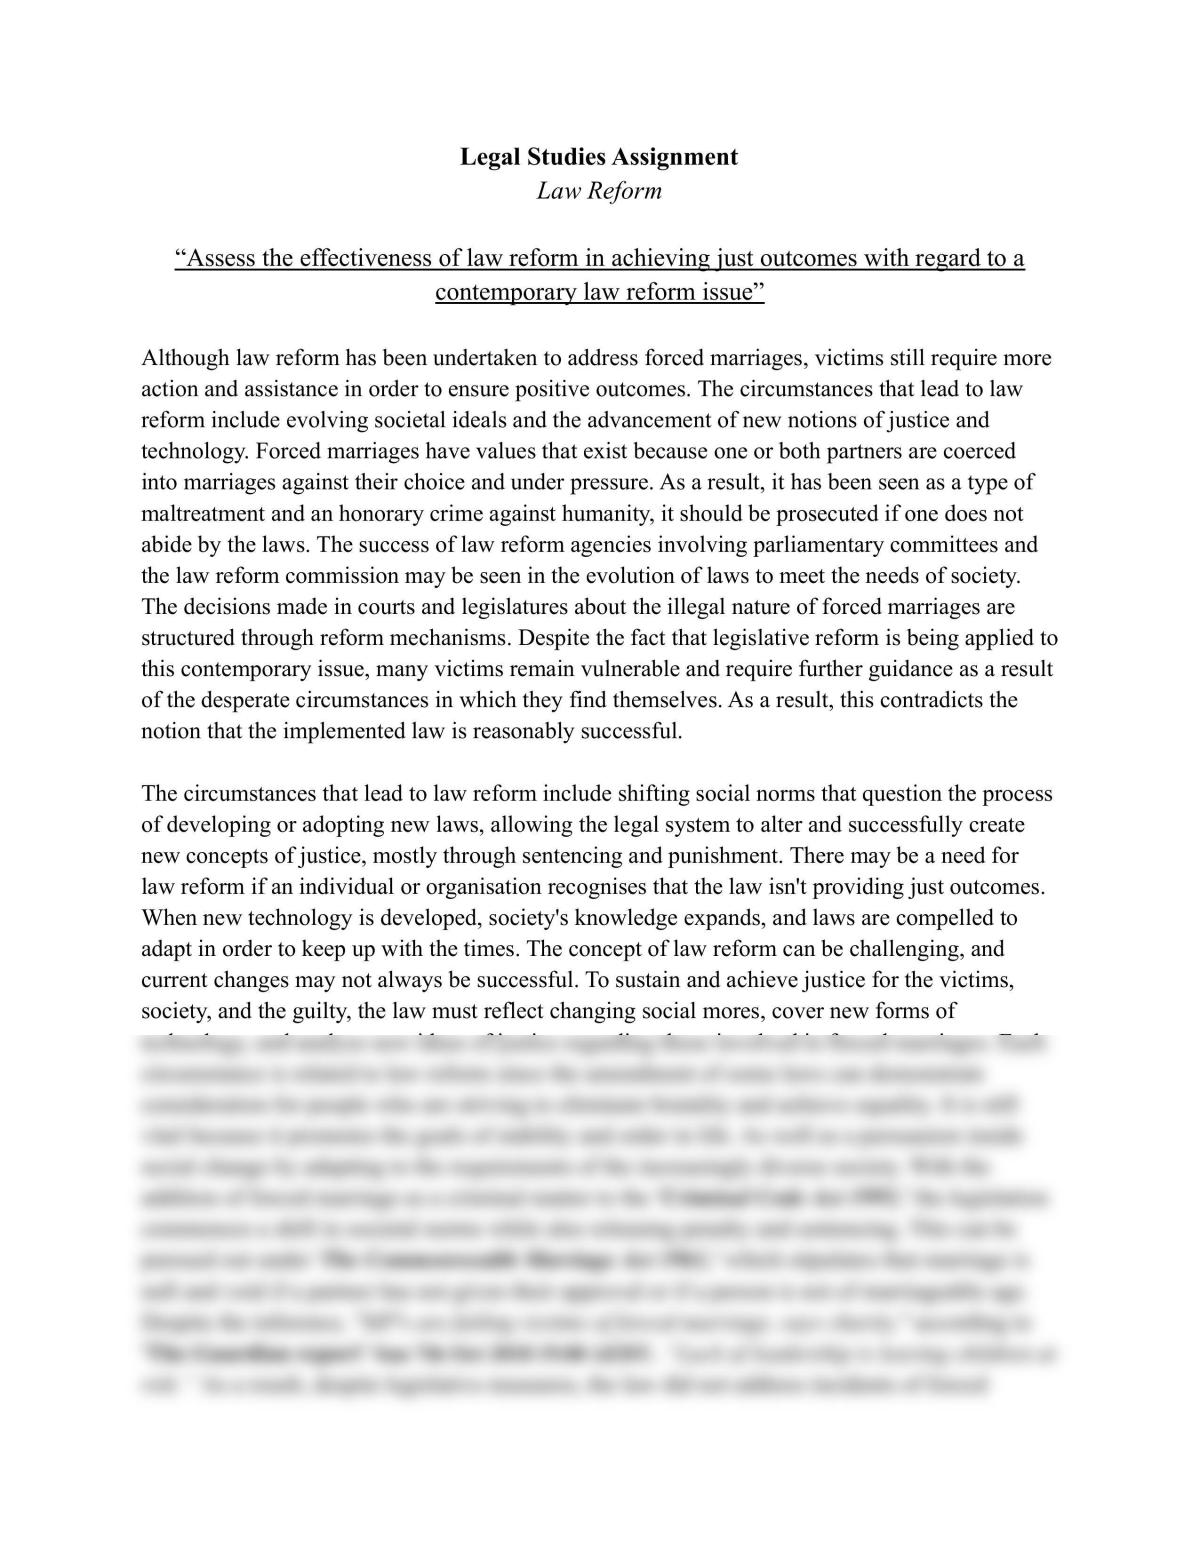 law reform essay legal studies